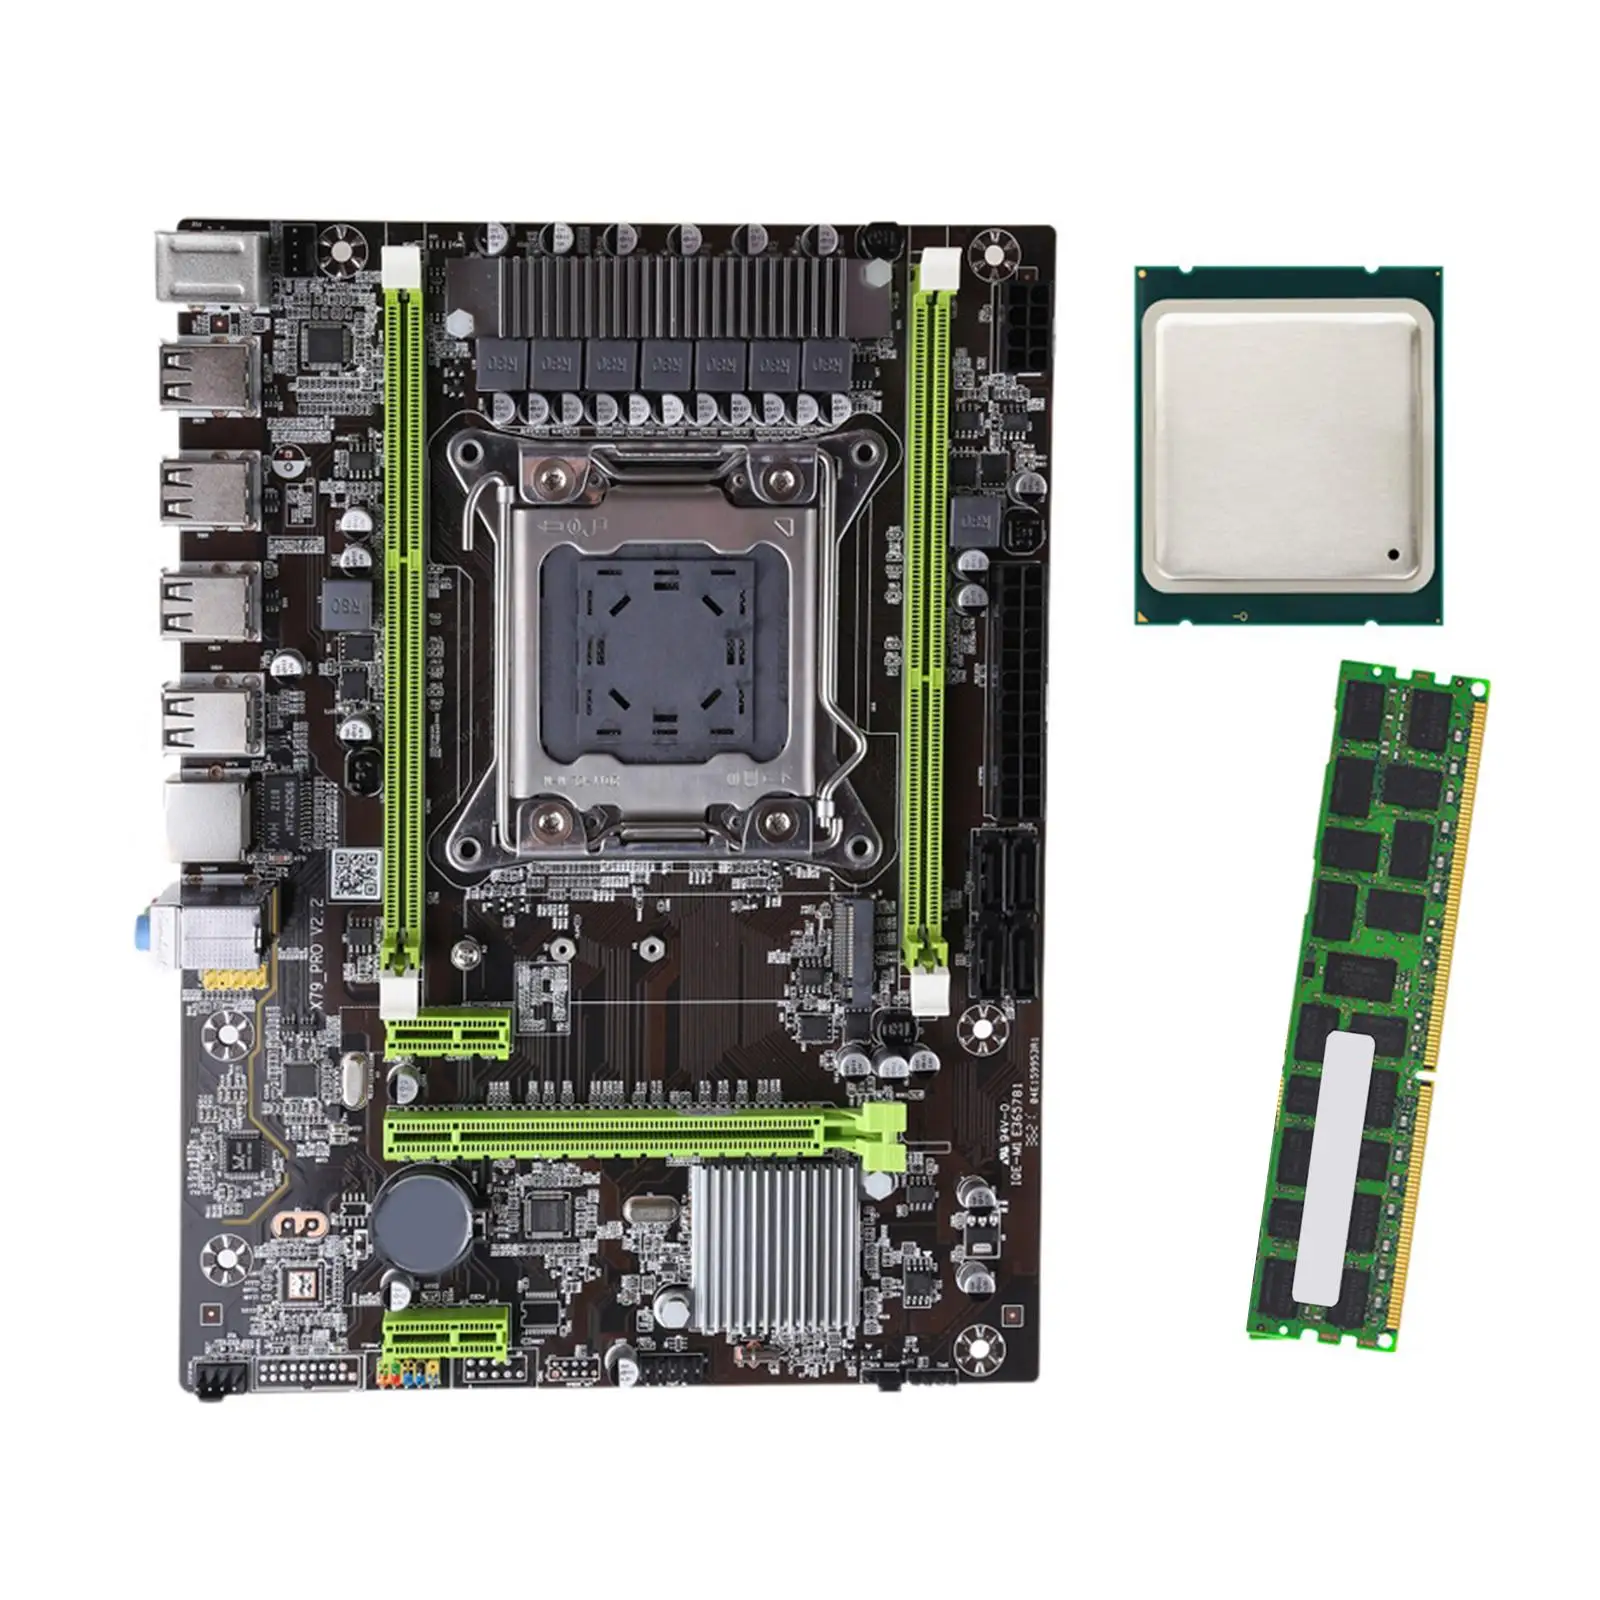 x79 Pro Motherboard Durable 16x Stable Performance 16GB Memory Capacity LGA 2011 4x SATA2.0 for E5-2640 E5-2650 E5-2670 E5-2660